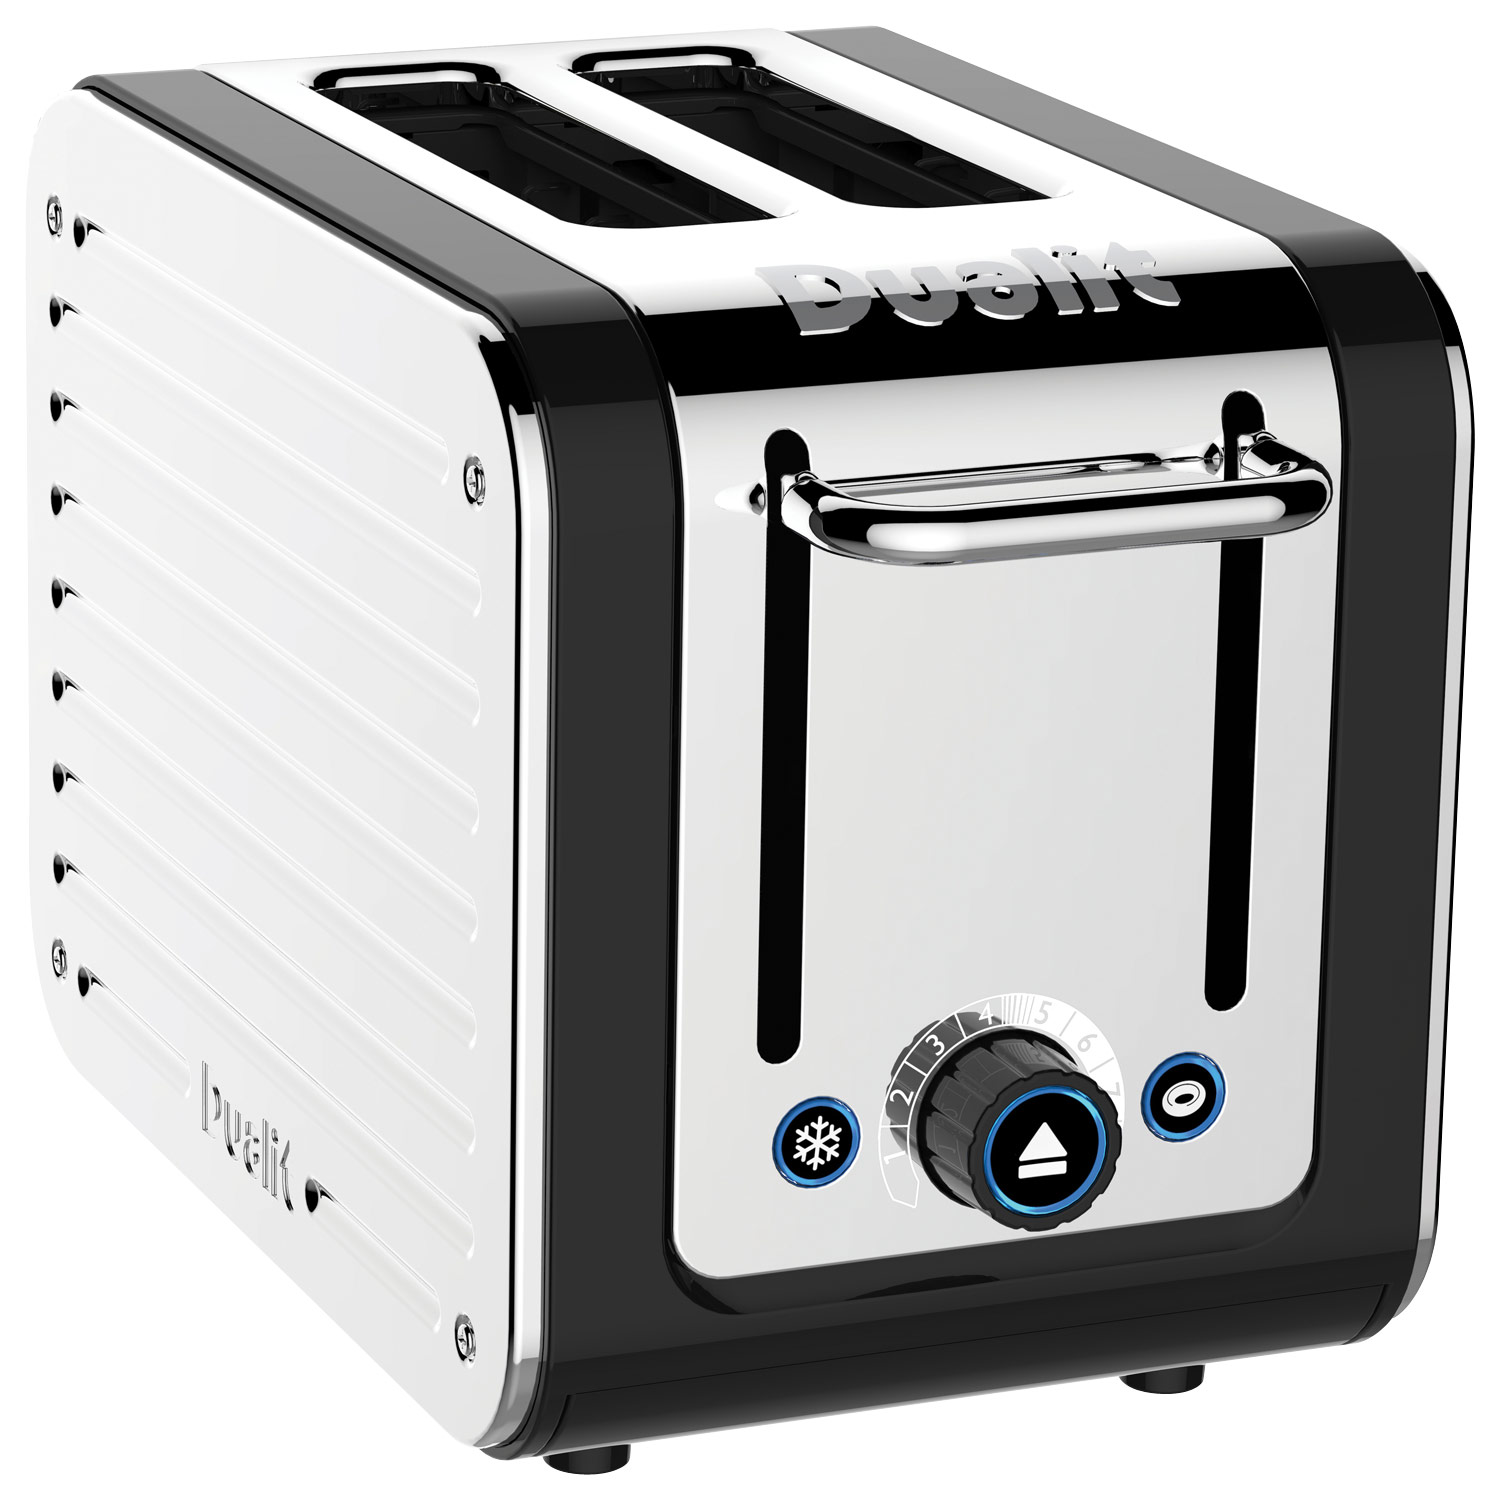 Dualit Design Series 2-Slice Extra-Wide Slot Toaster Black/Stainless Steel  26555 - Best Buy